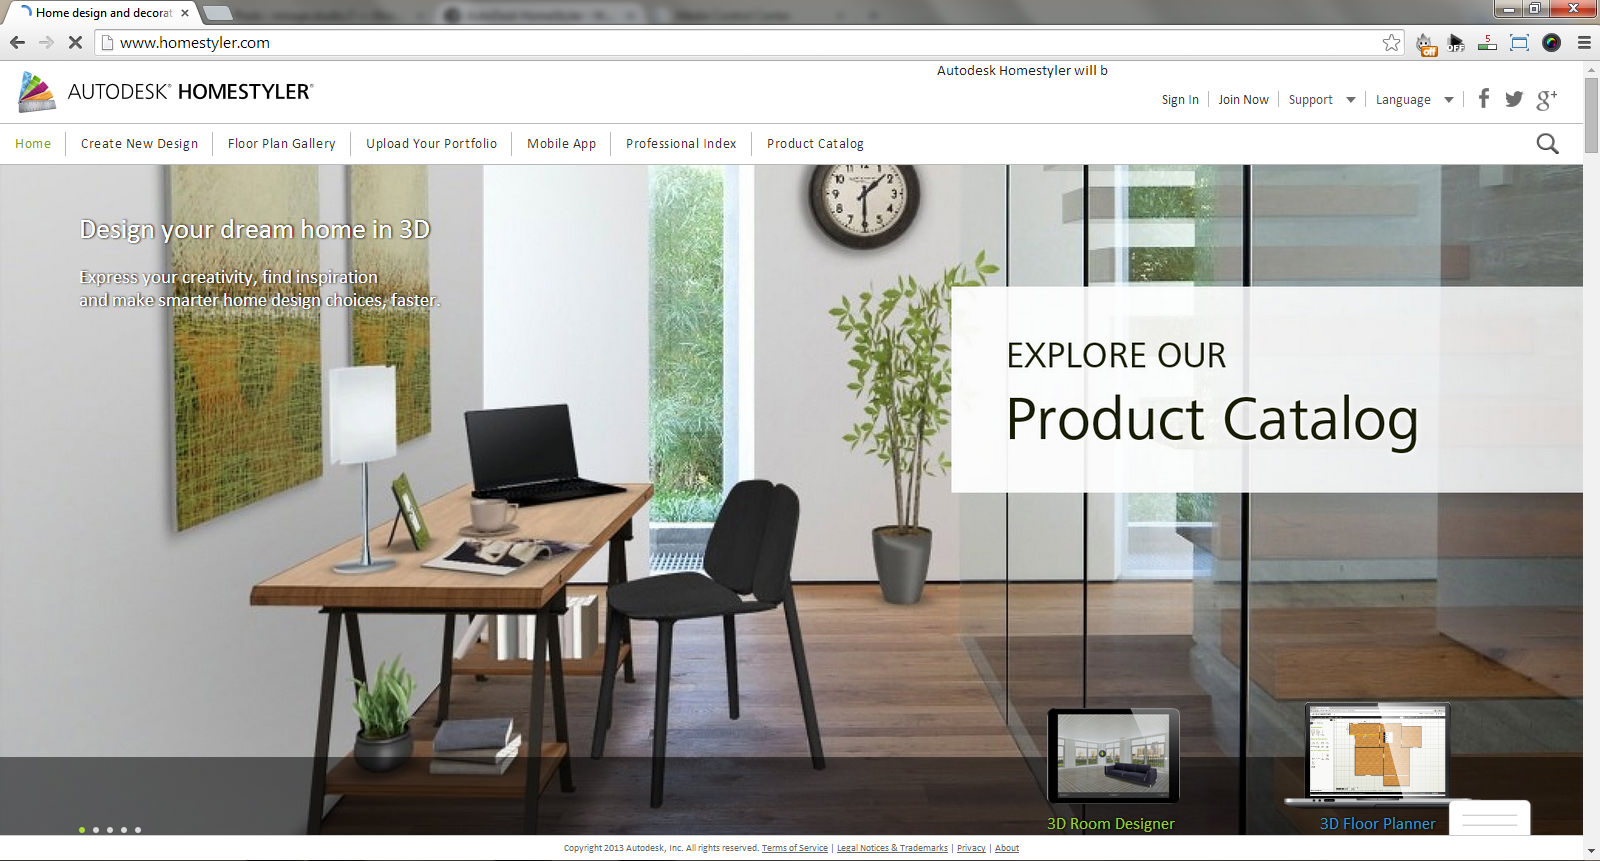 Home Architecture Design Software on Autodesk Homestyler     Web Based Interior Design Software